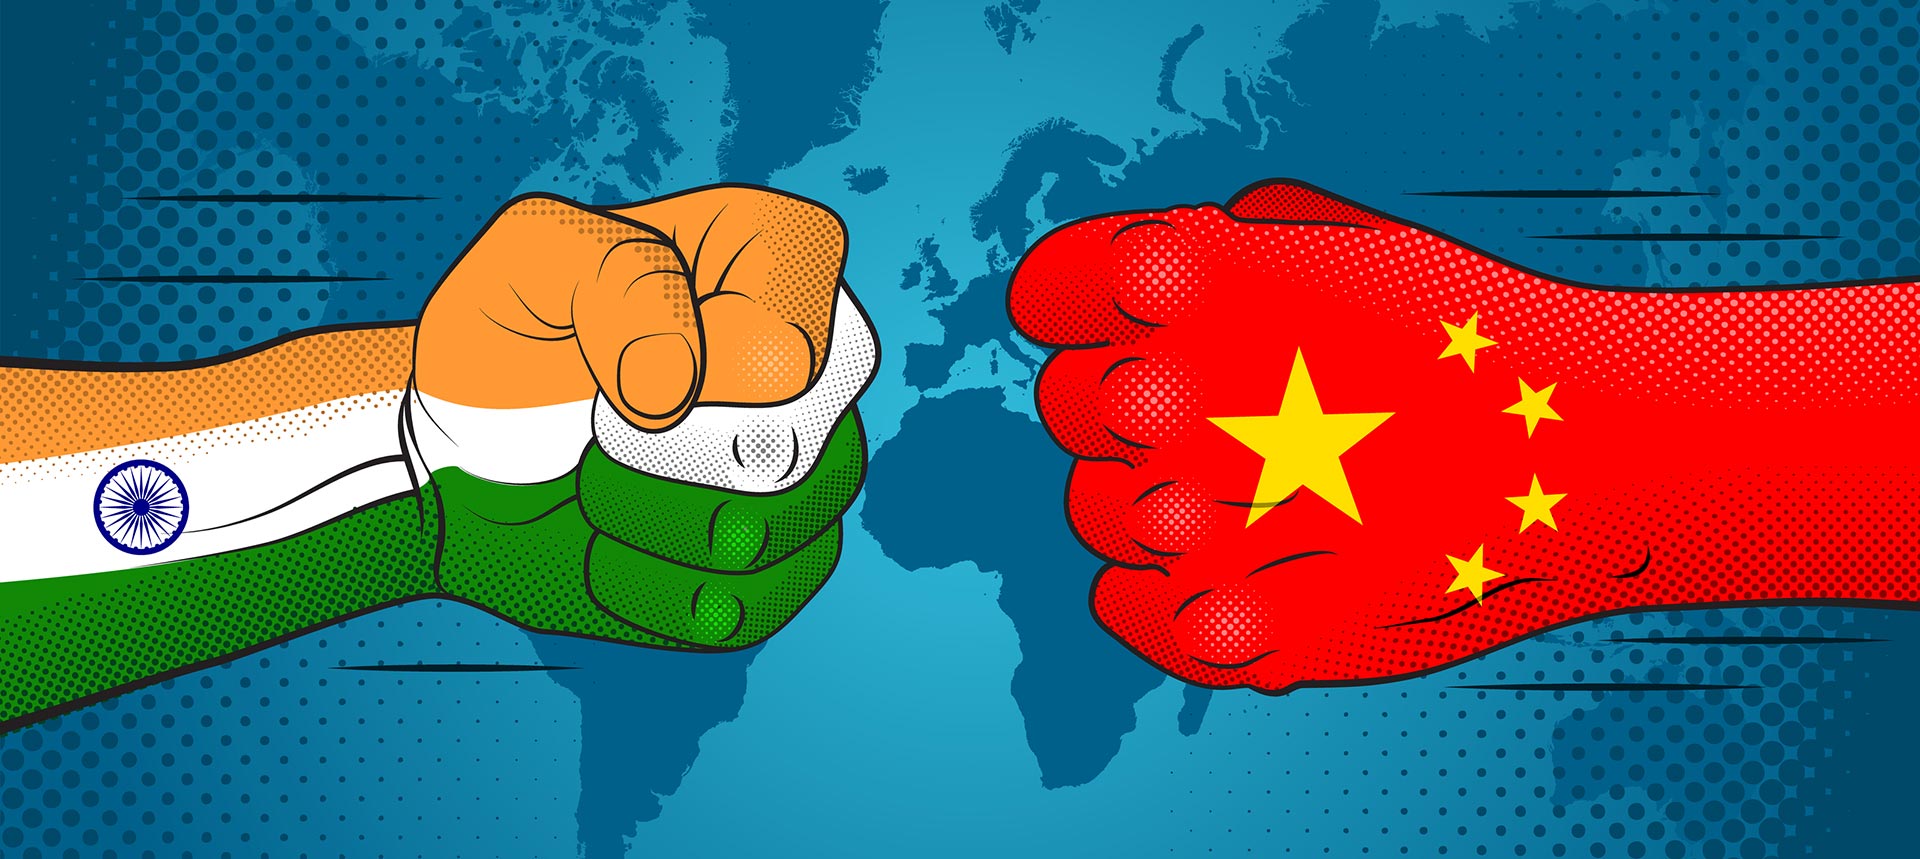 China India border, China India relations, India China news, India news, Indian news, China news, Chinese news, Xi Jinping, Narendra Modi, Ming Wai Sit